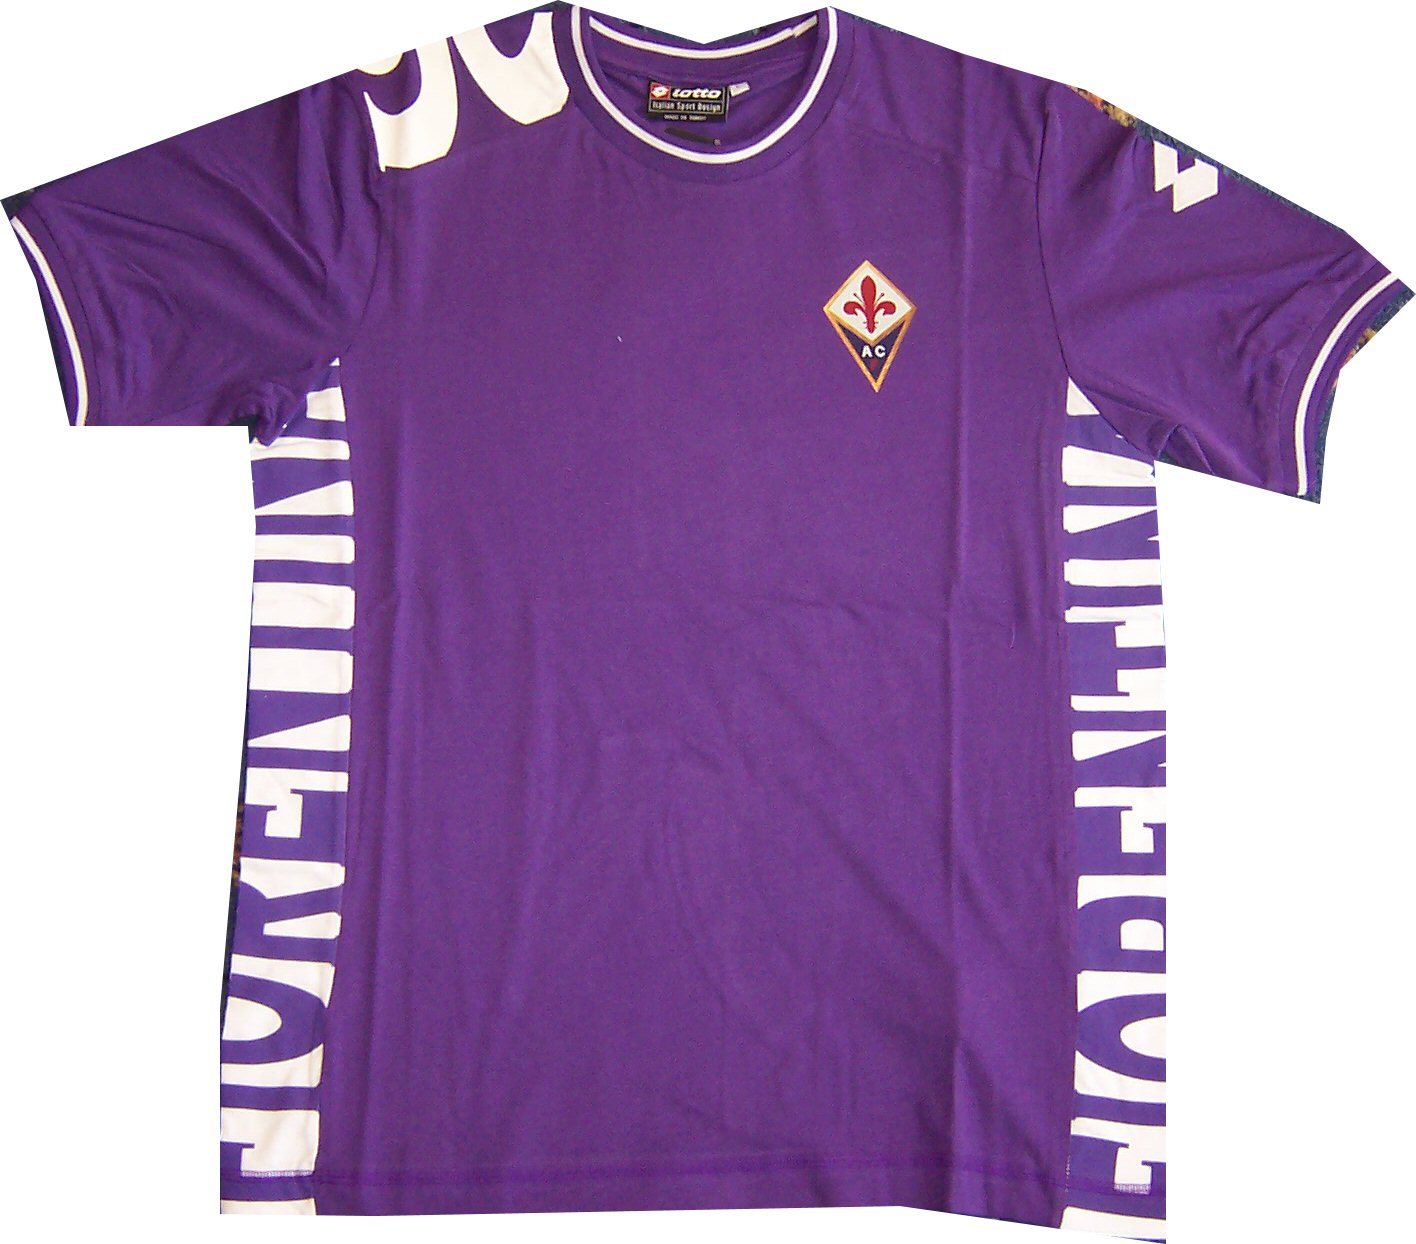 Italian teams Lotto 06-07 Fiorentina T-Shirt (purple)